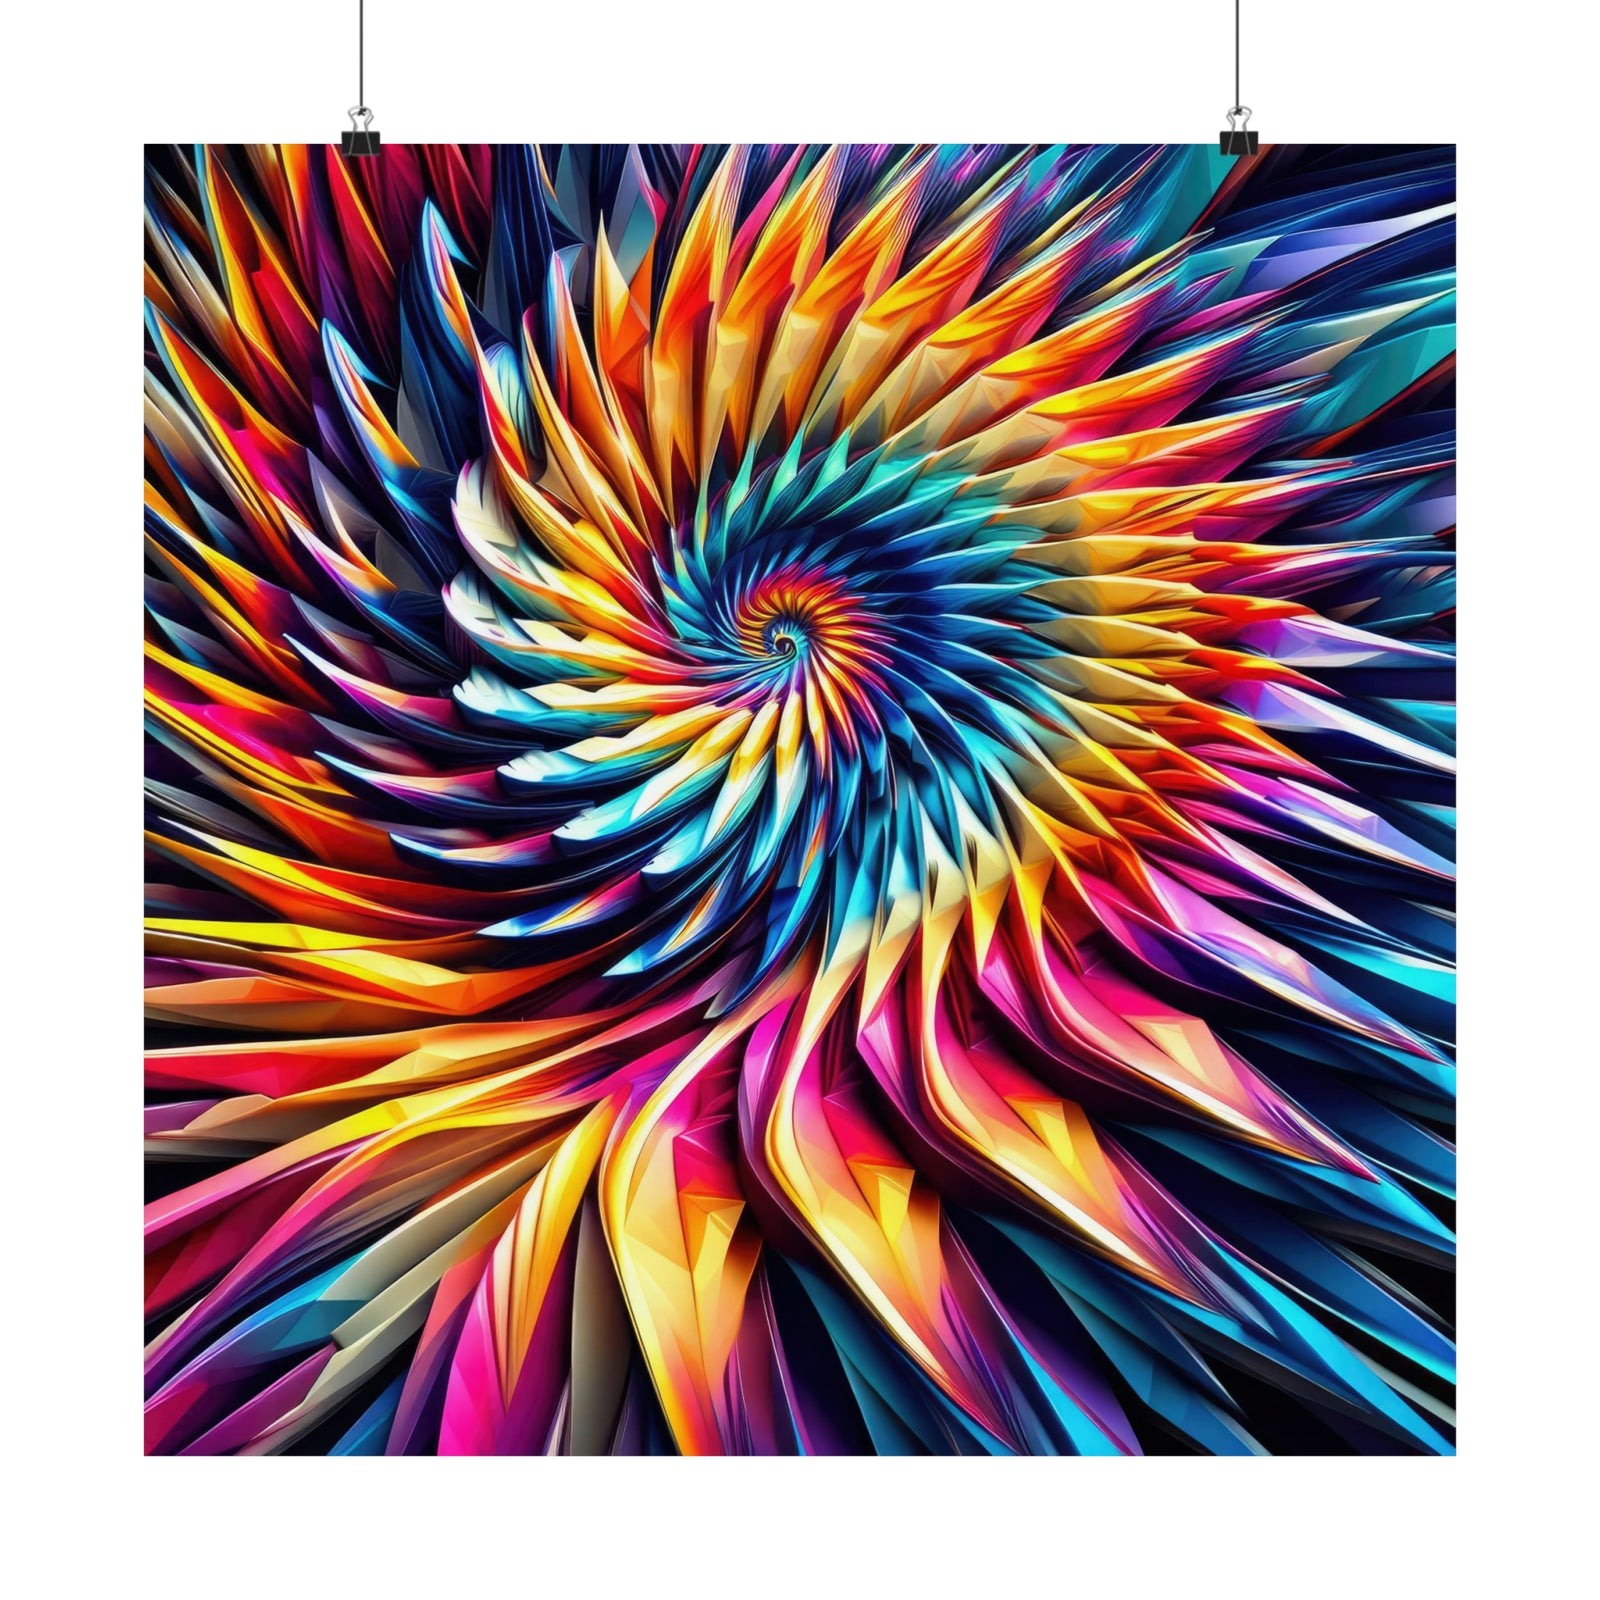 Fibonacci - Spiraling Kaleidoscope Poster